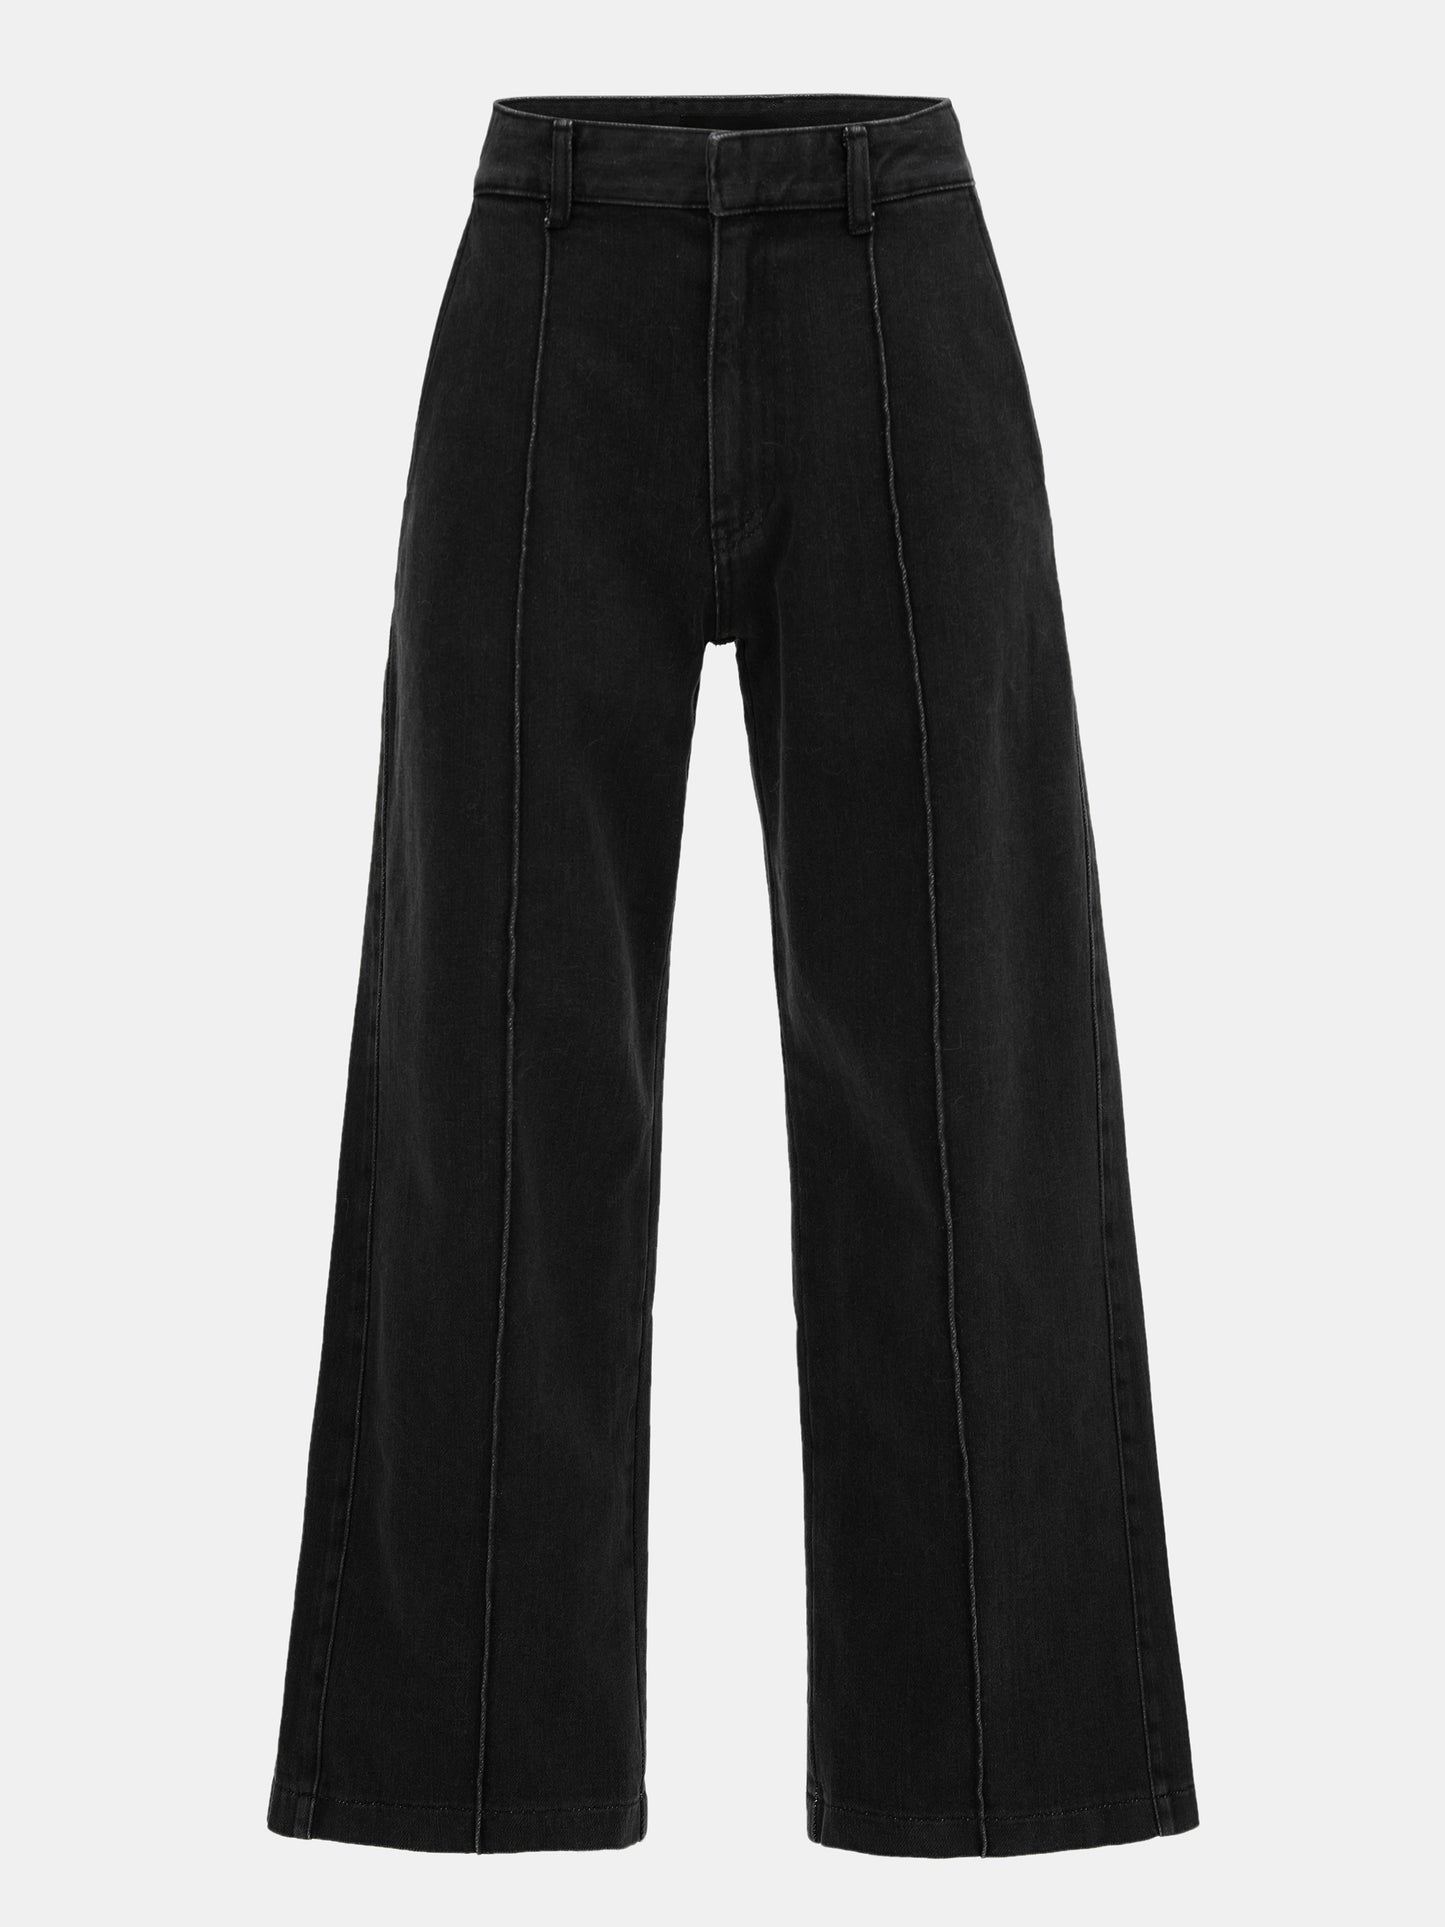 Panelled Jeans, Graphite Black